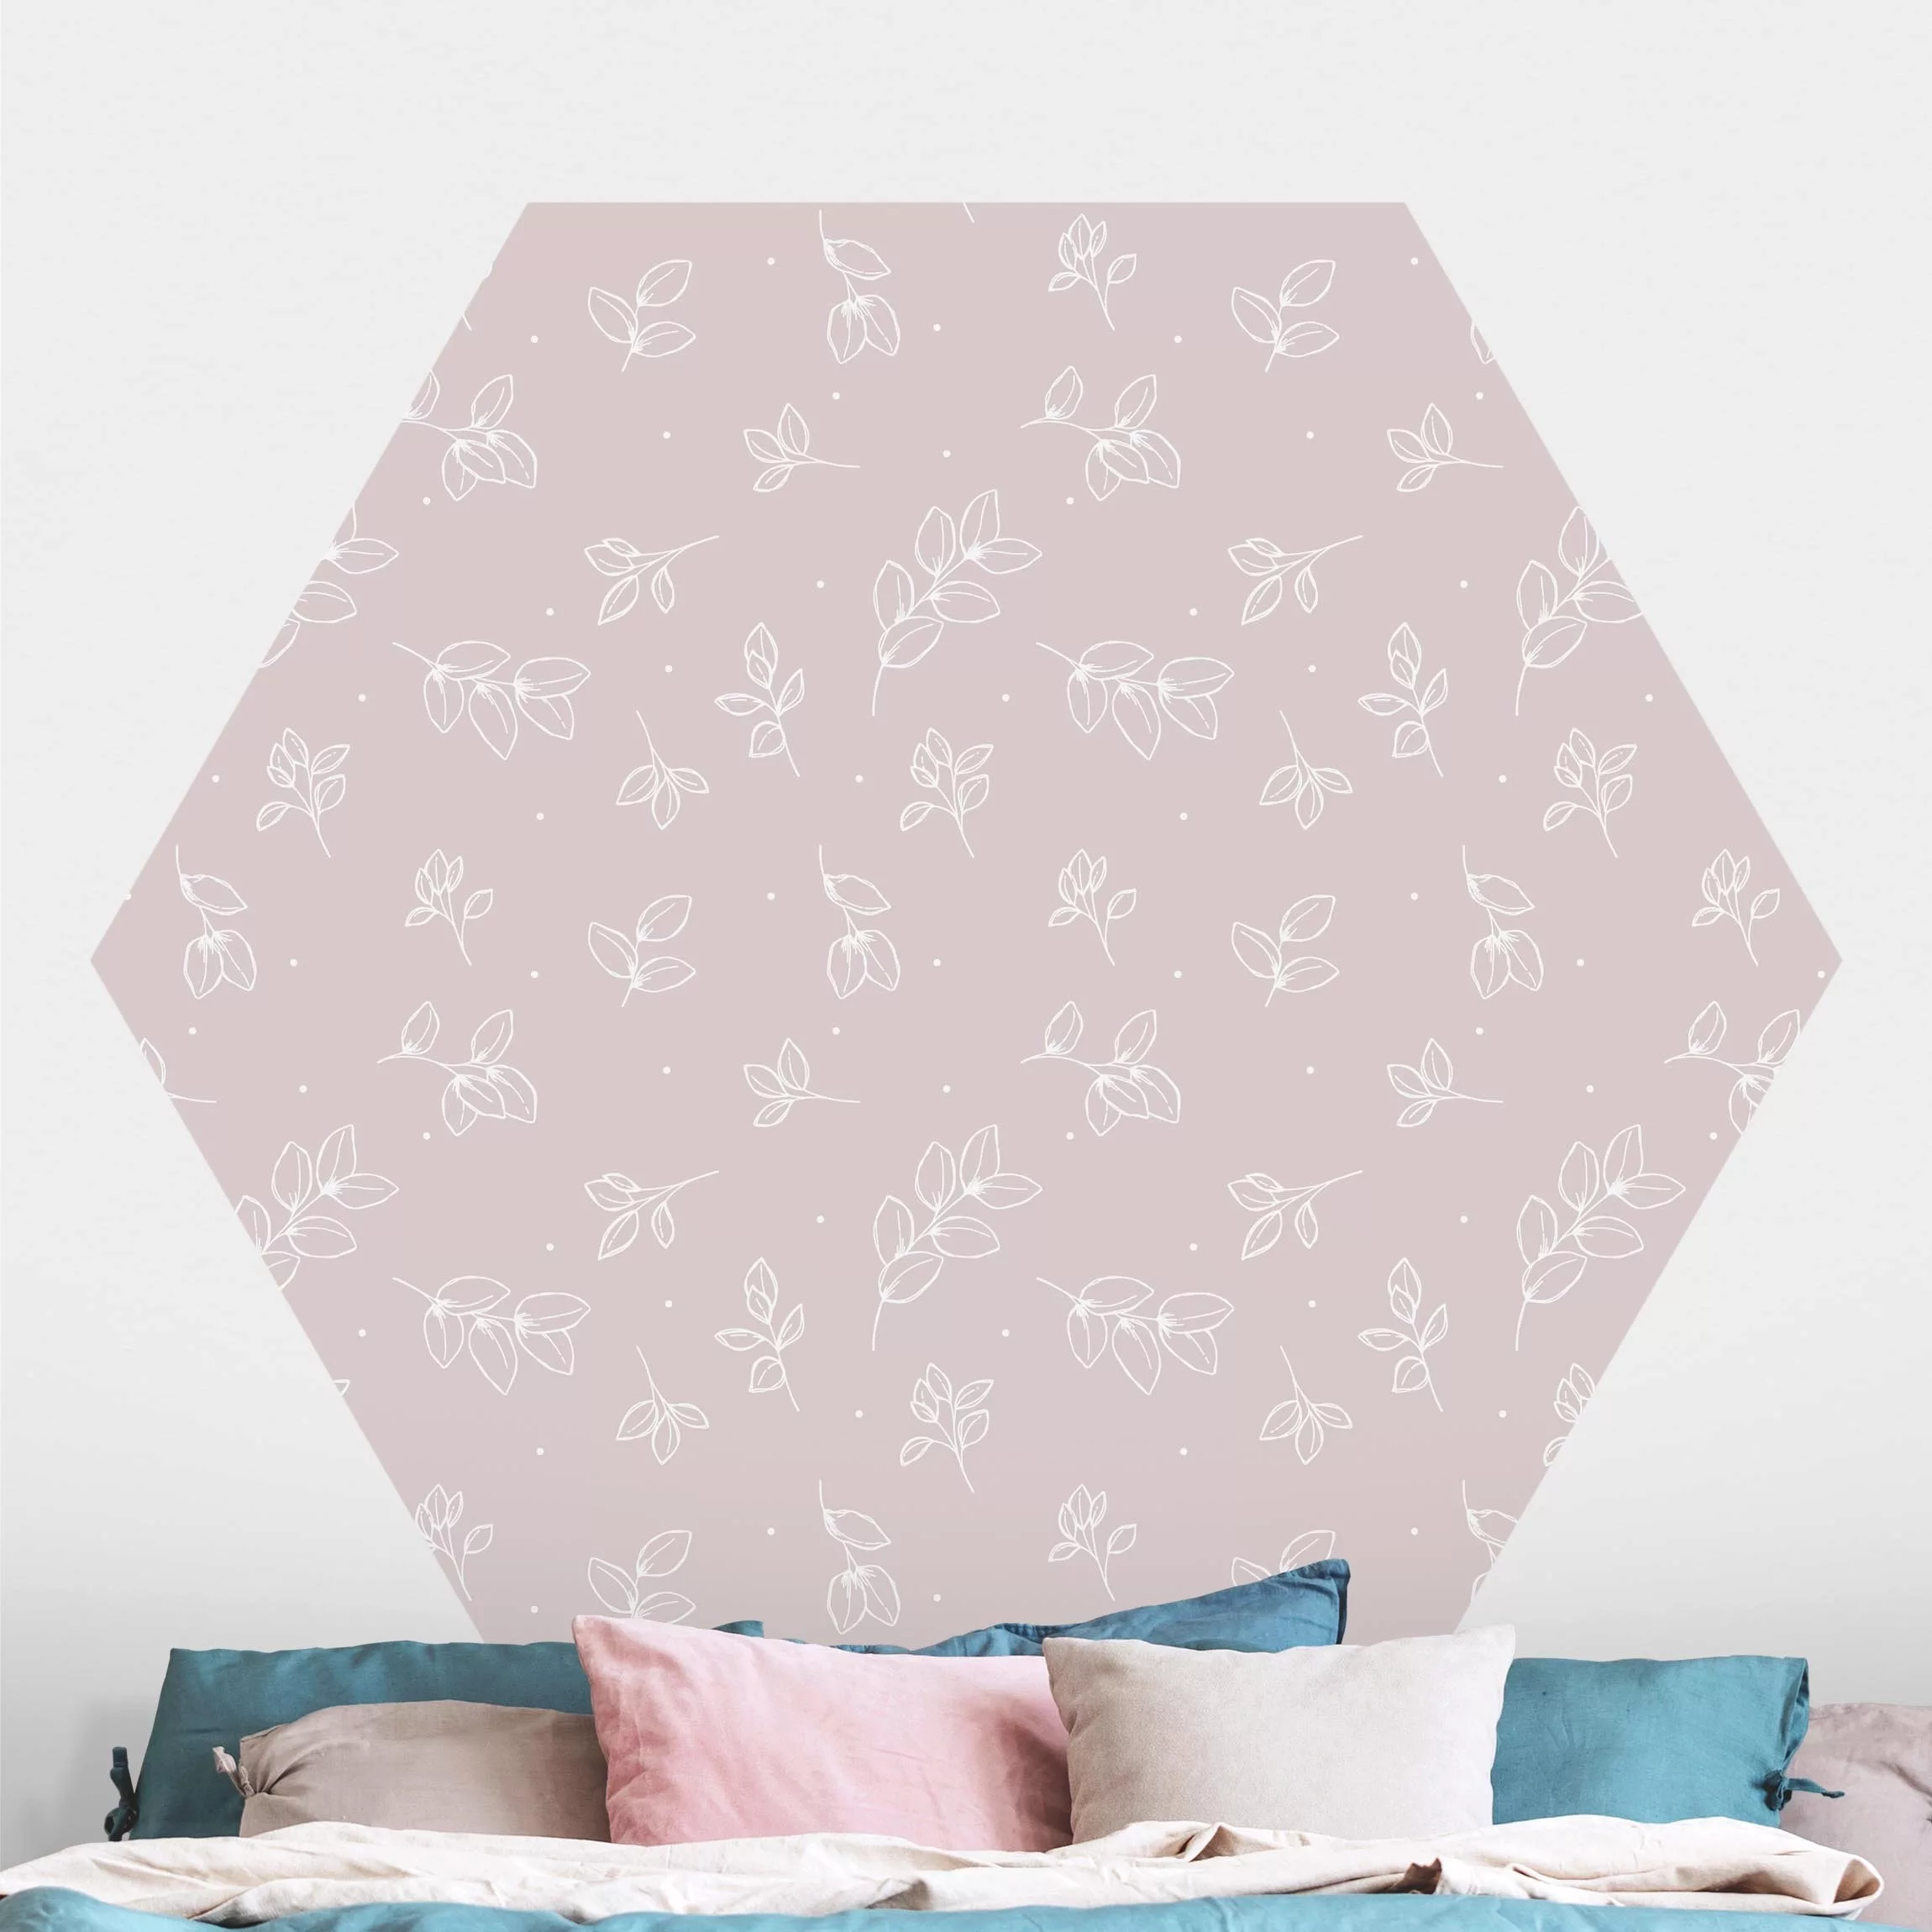 Hexagon Mustertapete selbstklebend Illustrierte Blätter Muster Pastell Rosa günstig online kaufen